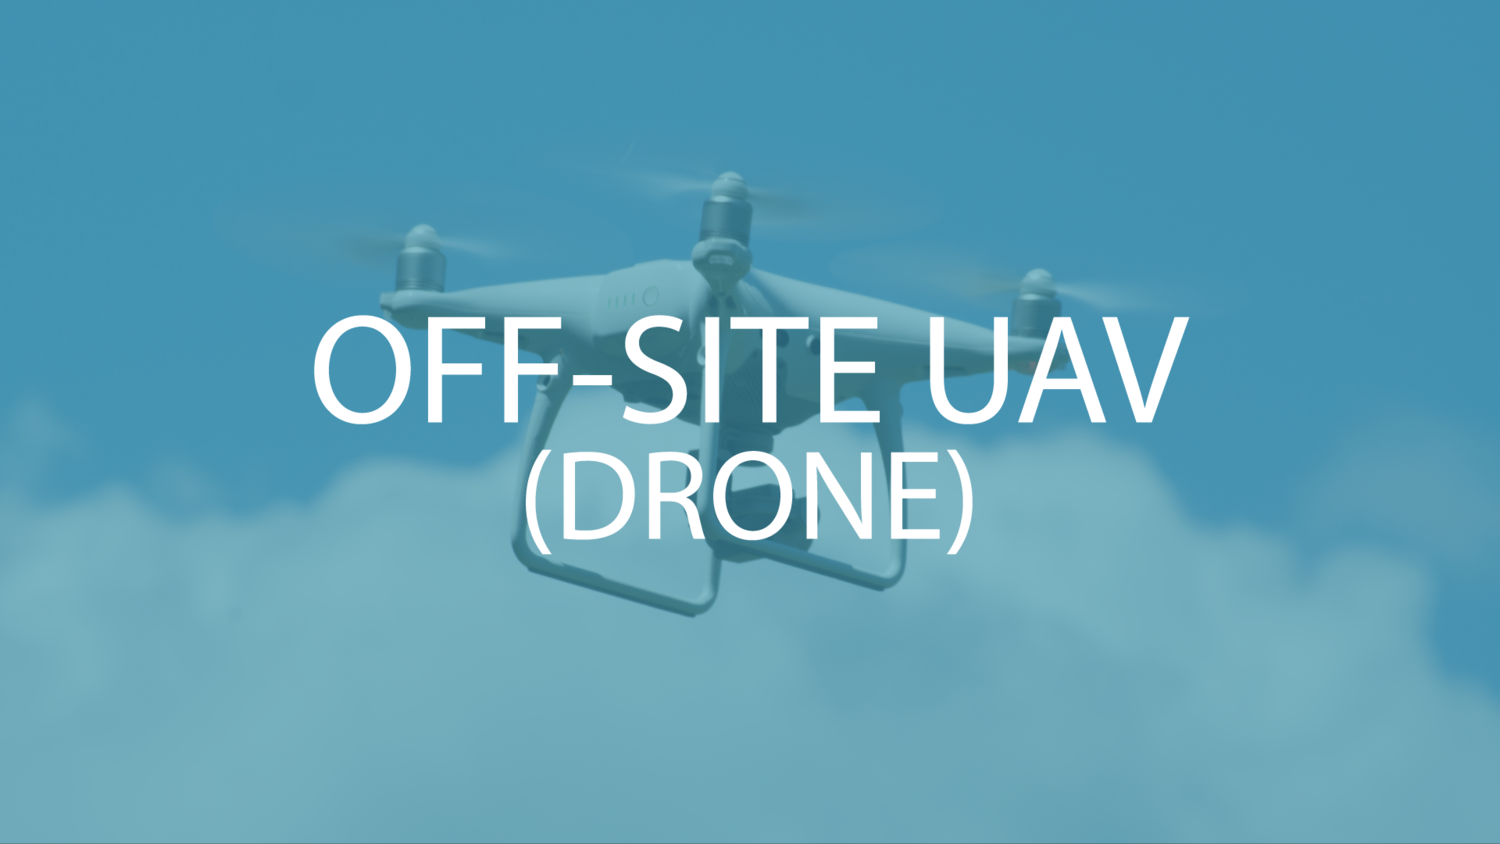 ADD-ON/ OFF SITE DRONE (UAV)